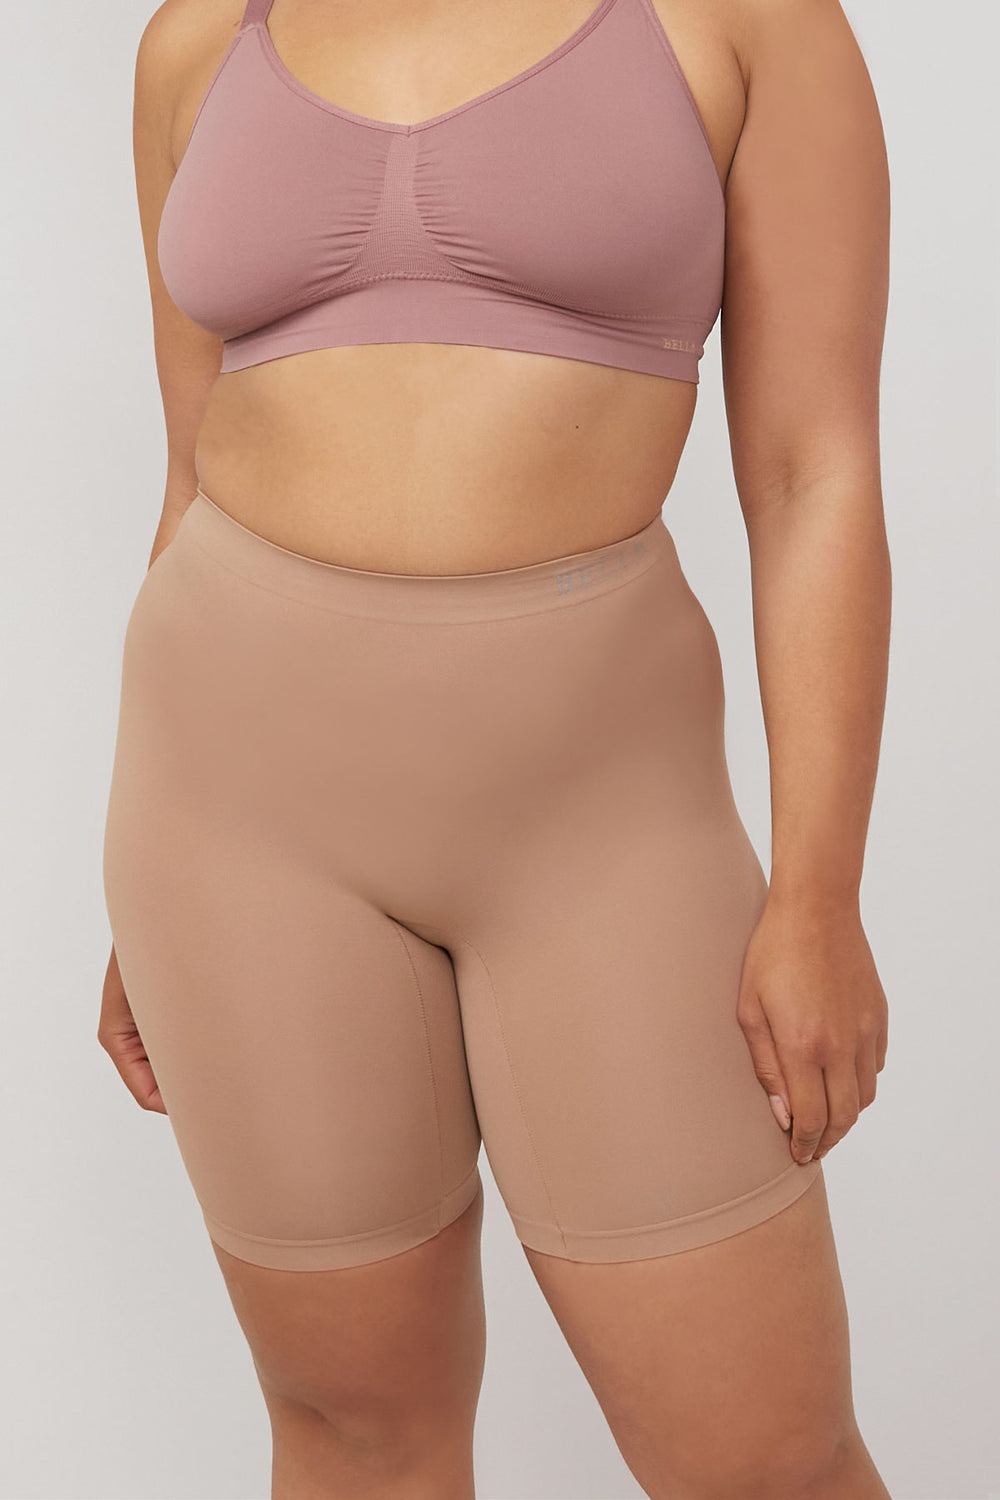 Women's underwear Anti Chafing Shorts | Bella Bodies UK | Taupe | Front